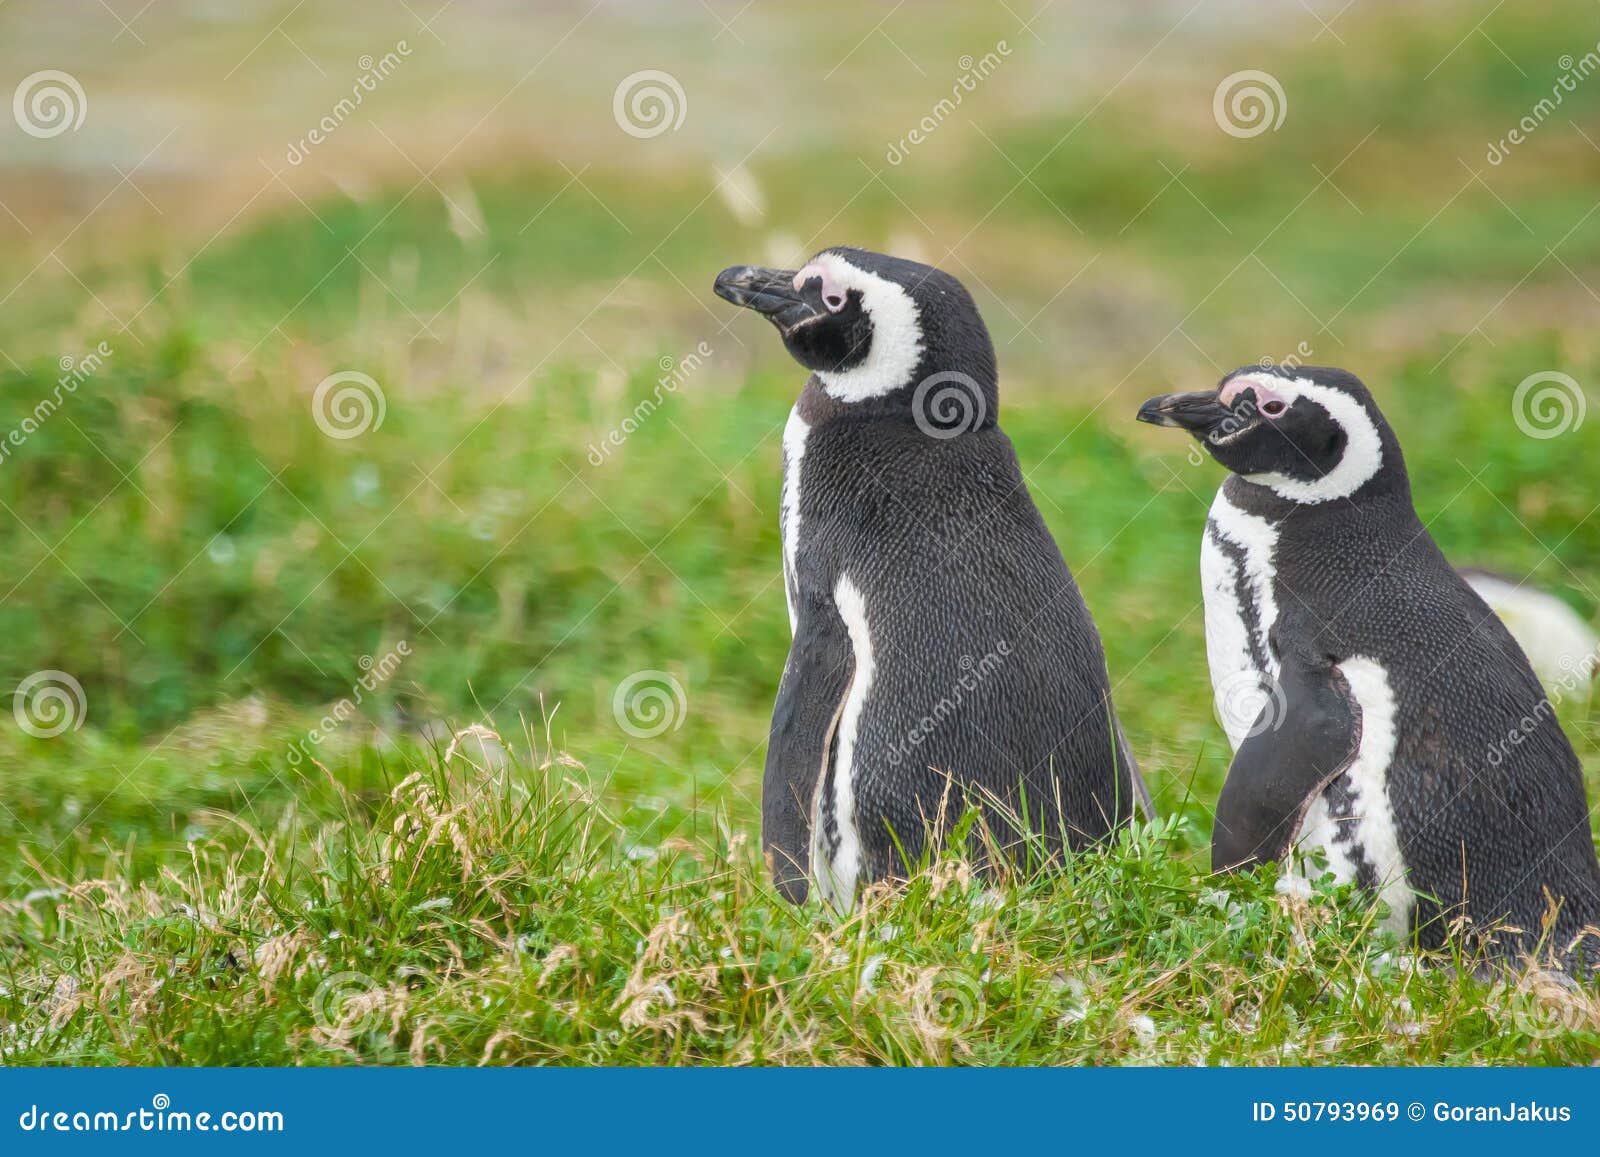 penguins in punta arenas